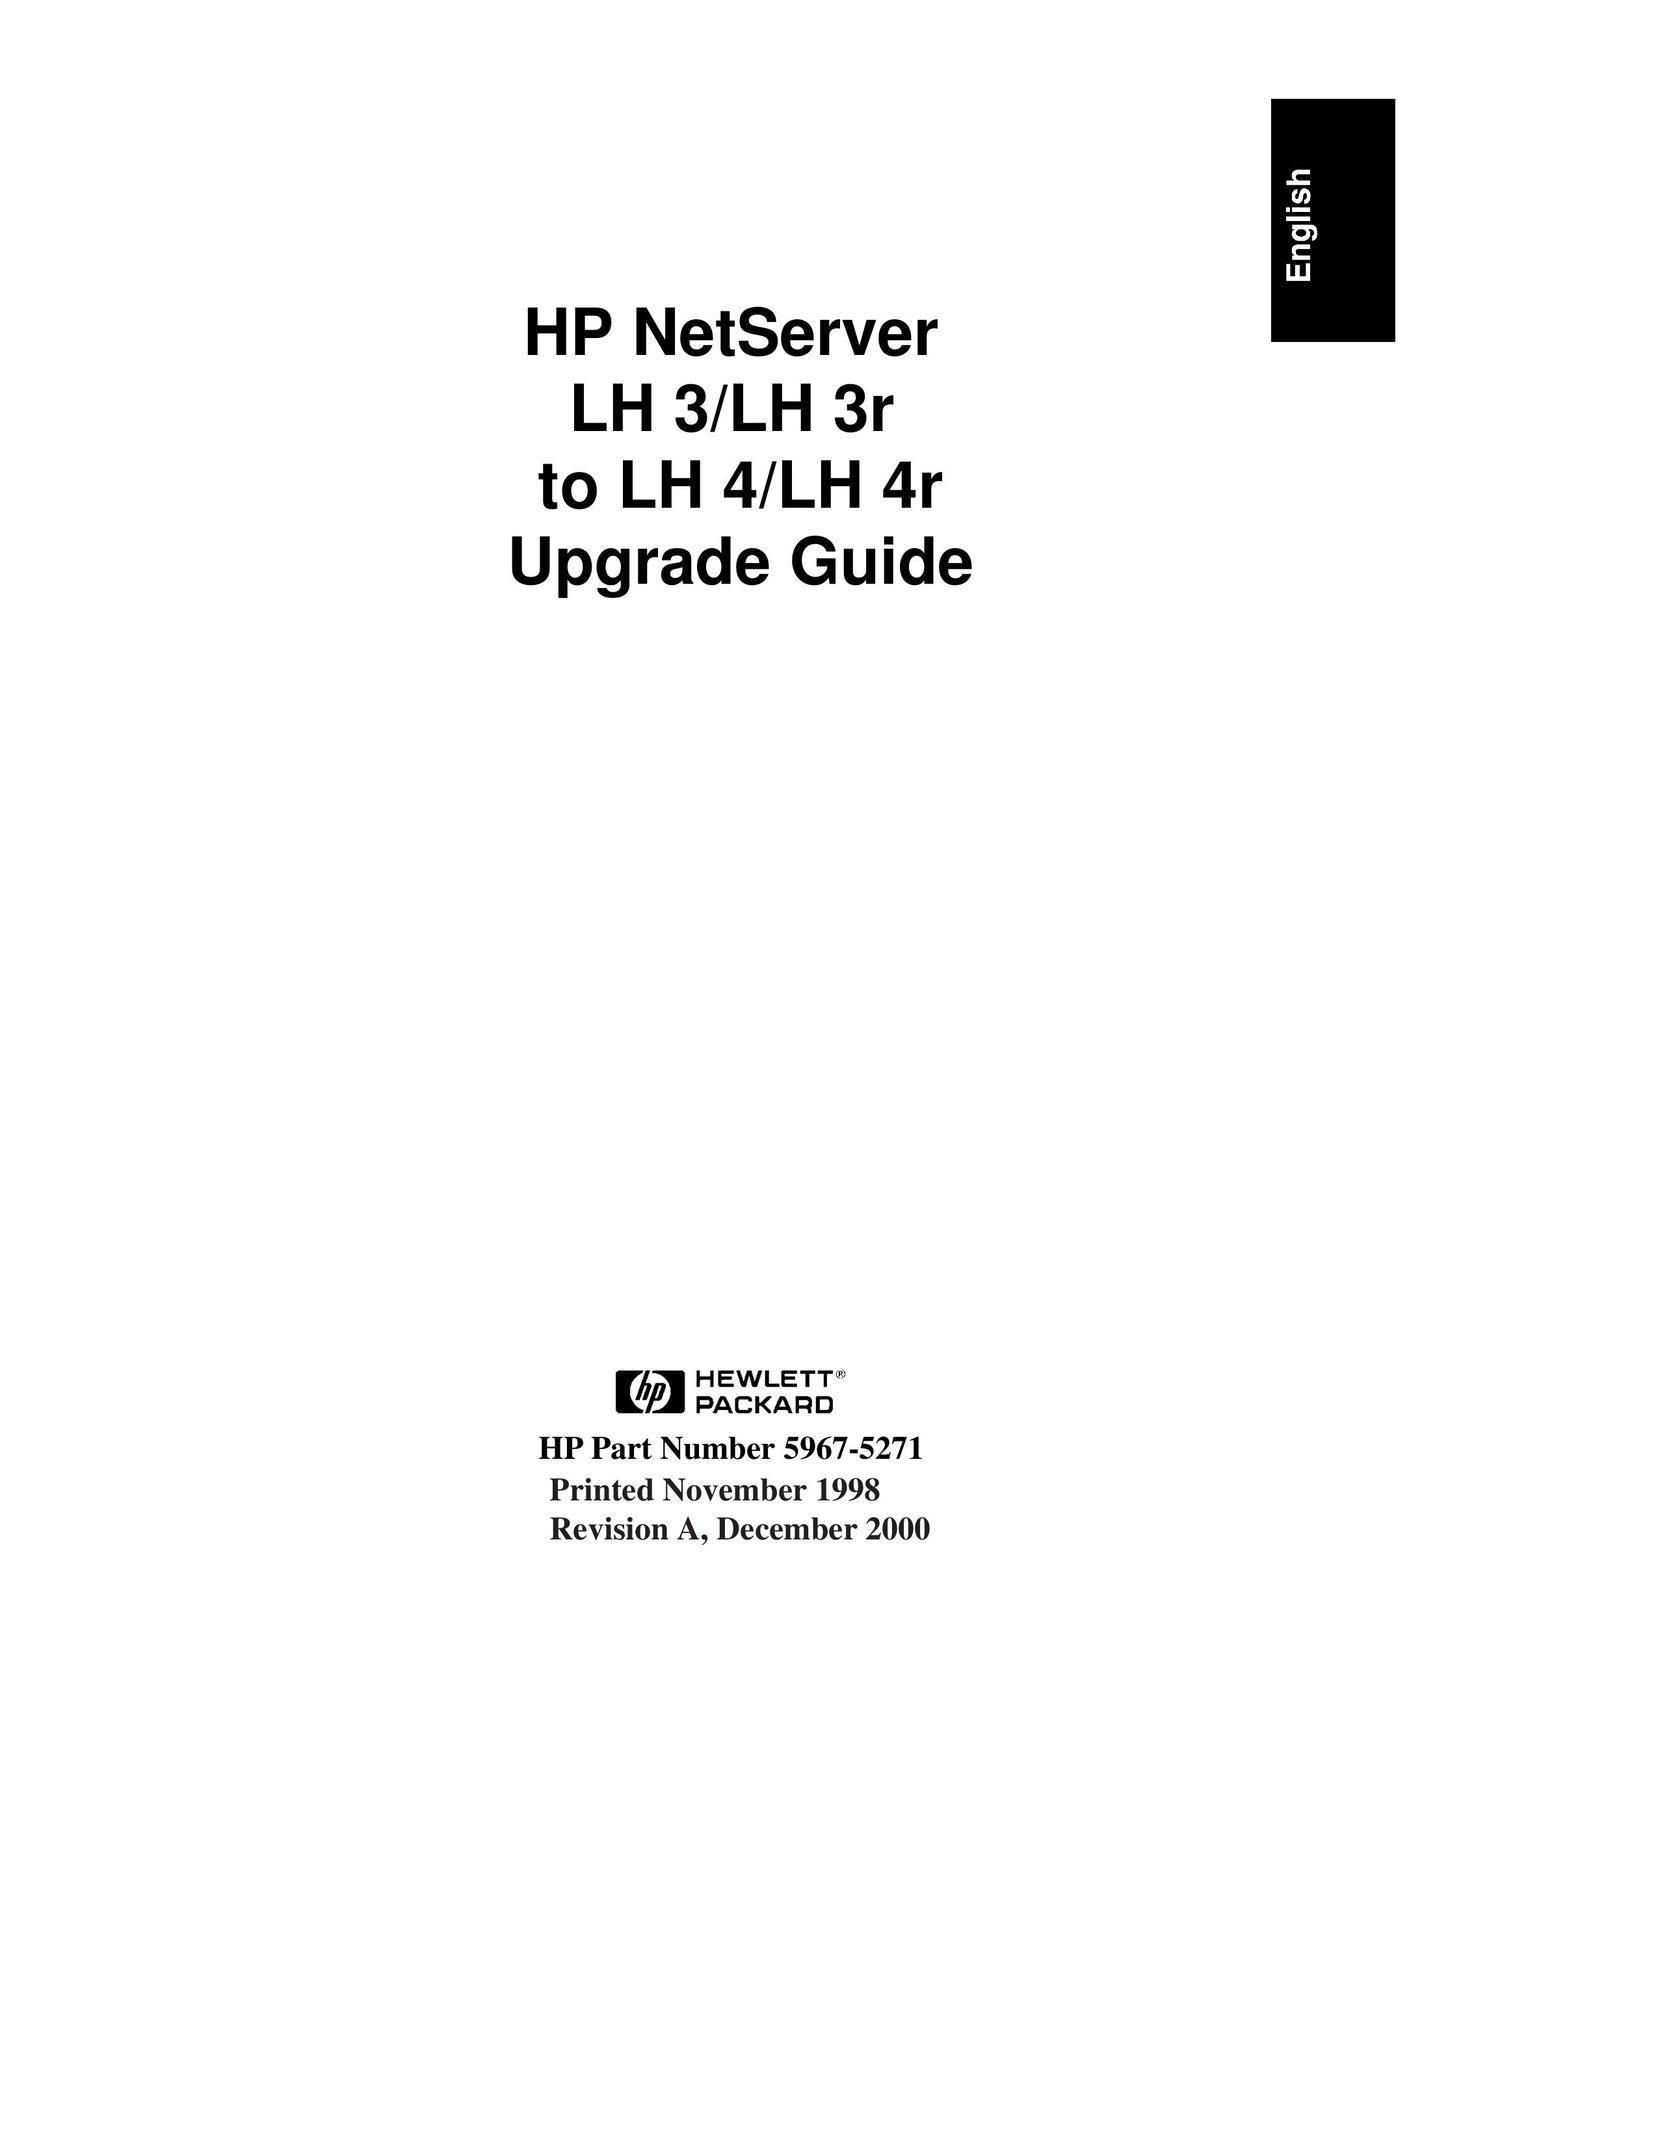 HP (Hewlett-Packard) LH 3 Network Cables User Manual